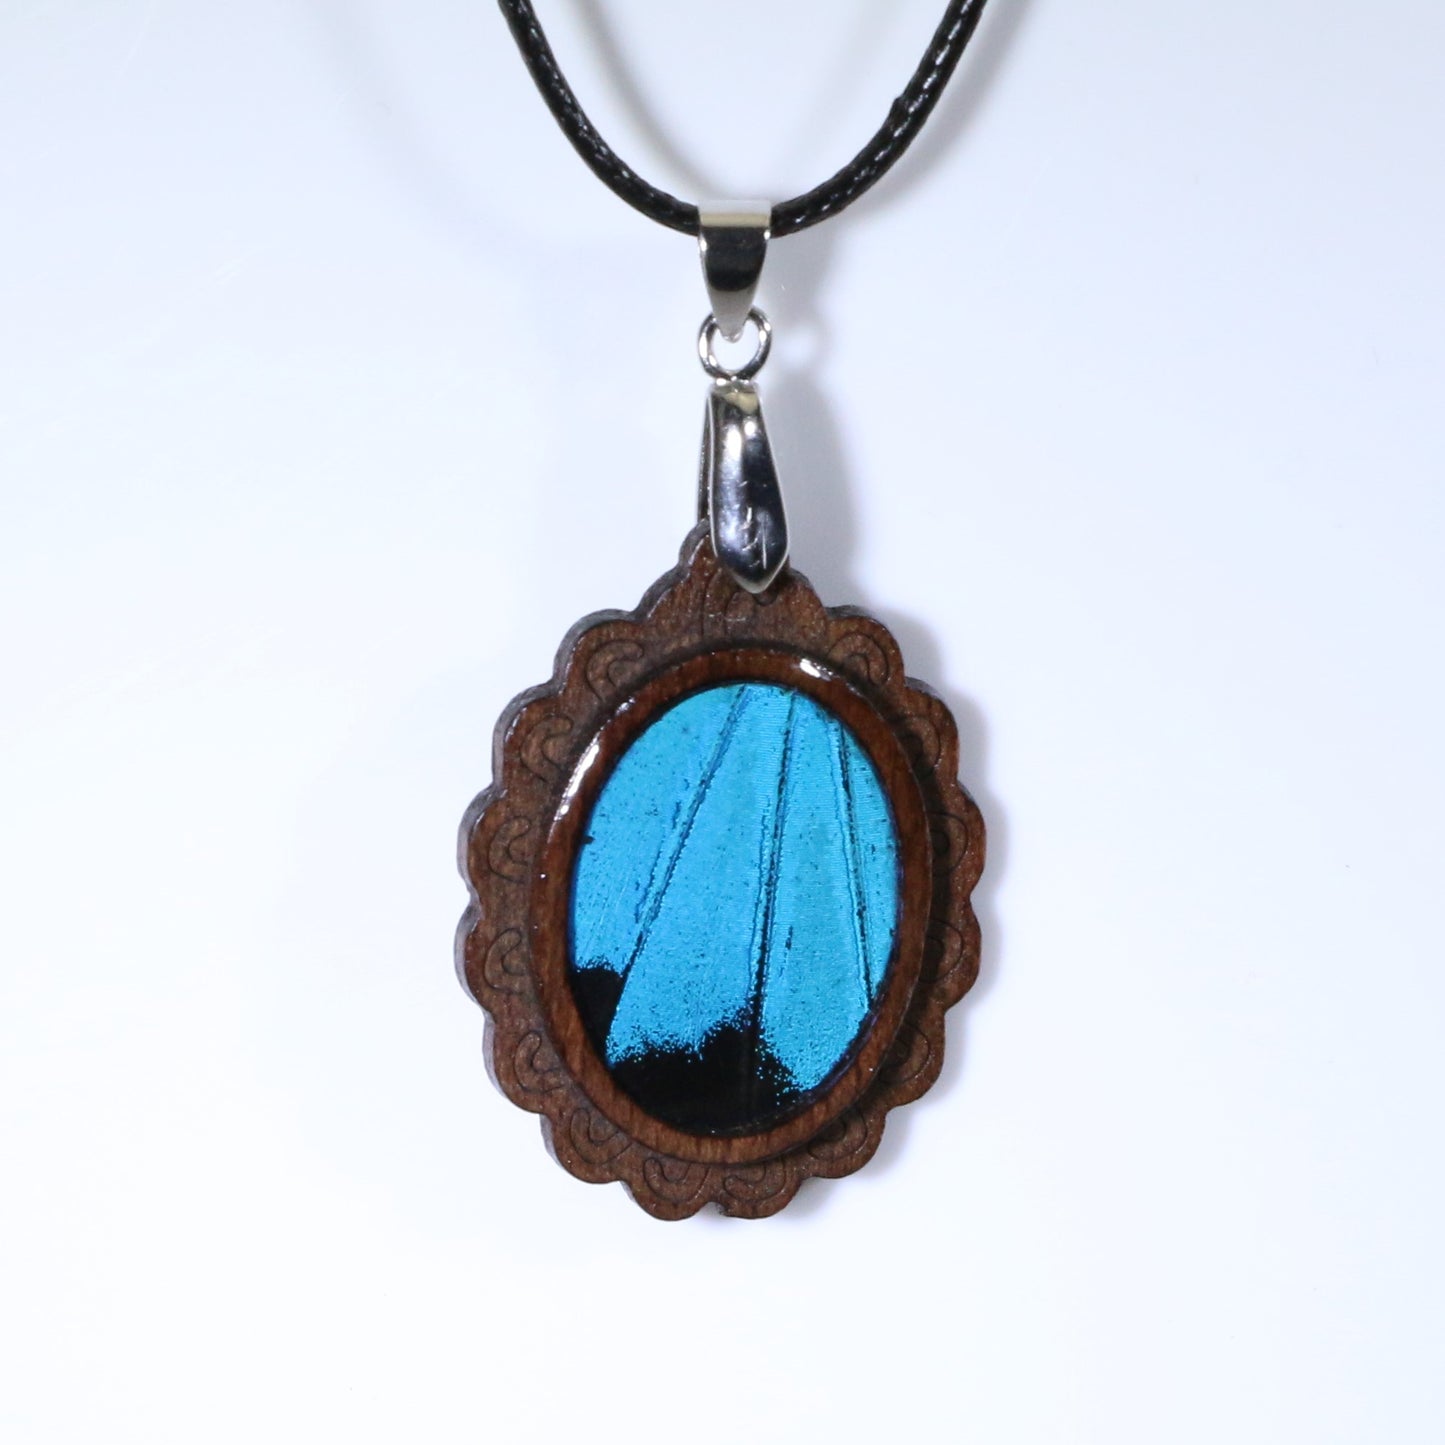 52717 - Real Butterfly Wing Jewelry - Pendant - Dark Wood - Oval - Filigree - Blue Mountain Swallowtail